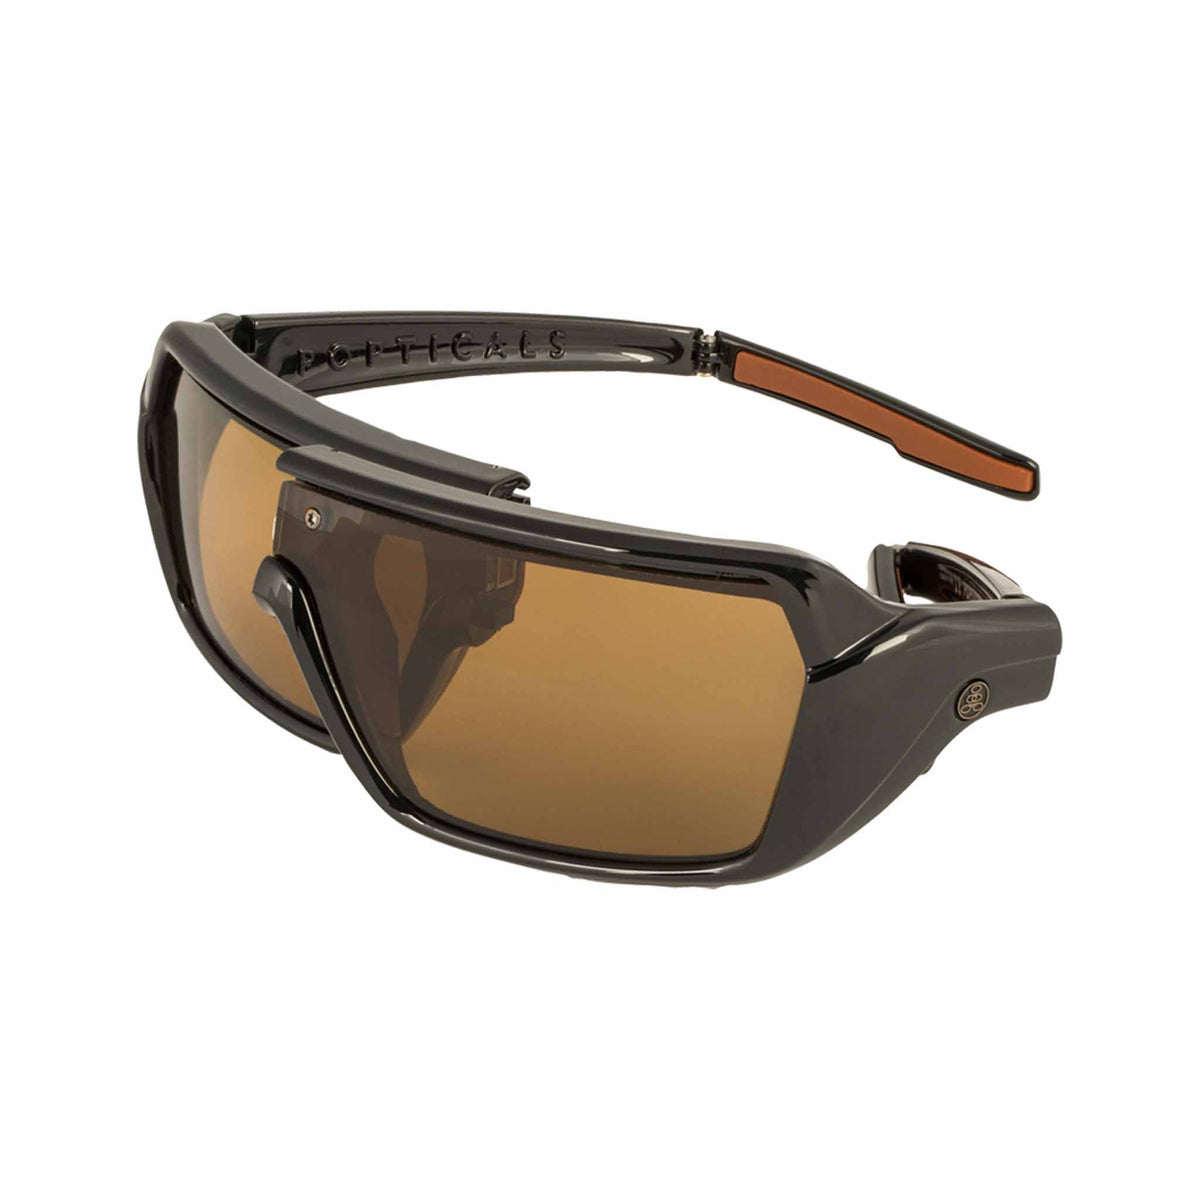 Popticals, Premium Compact Sunglasses, PopStorm, 010060-BGNP, Polarized Sunglasses, Gloss Black Frame, Brown Lenses, Spider View